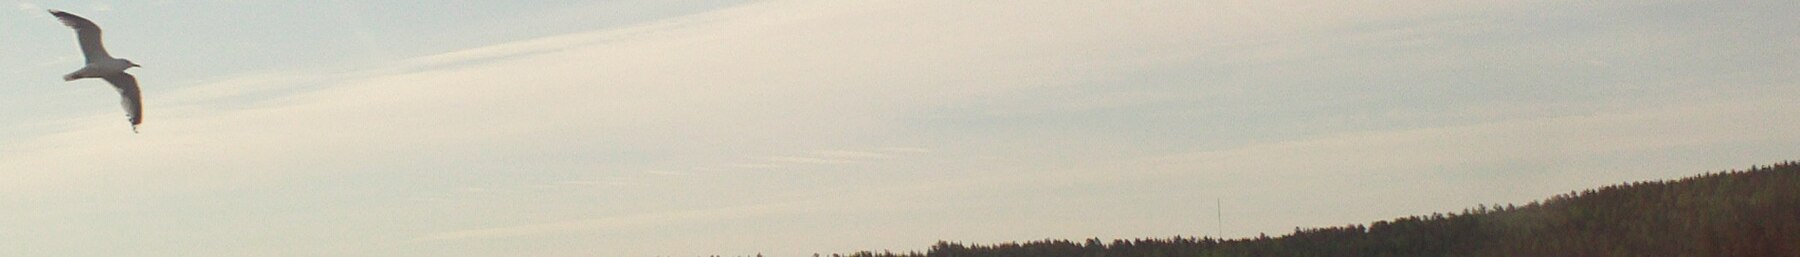 Centralfinlands banner Flygande fågel.jpg